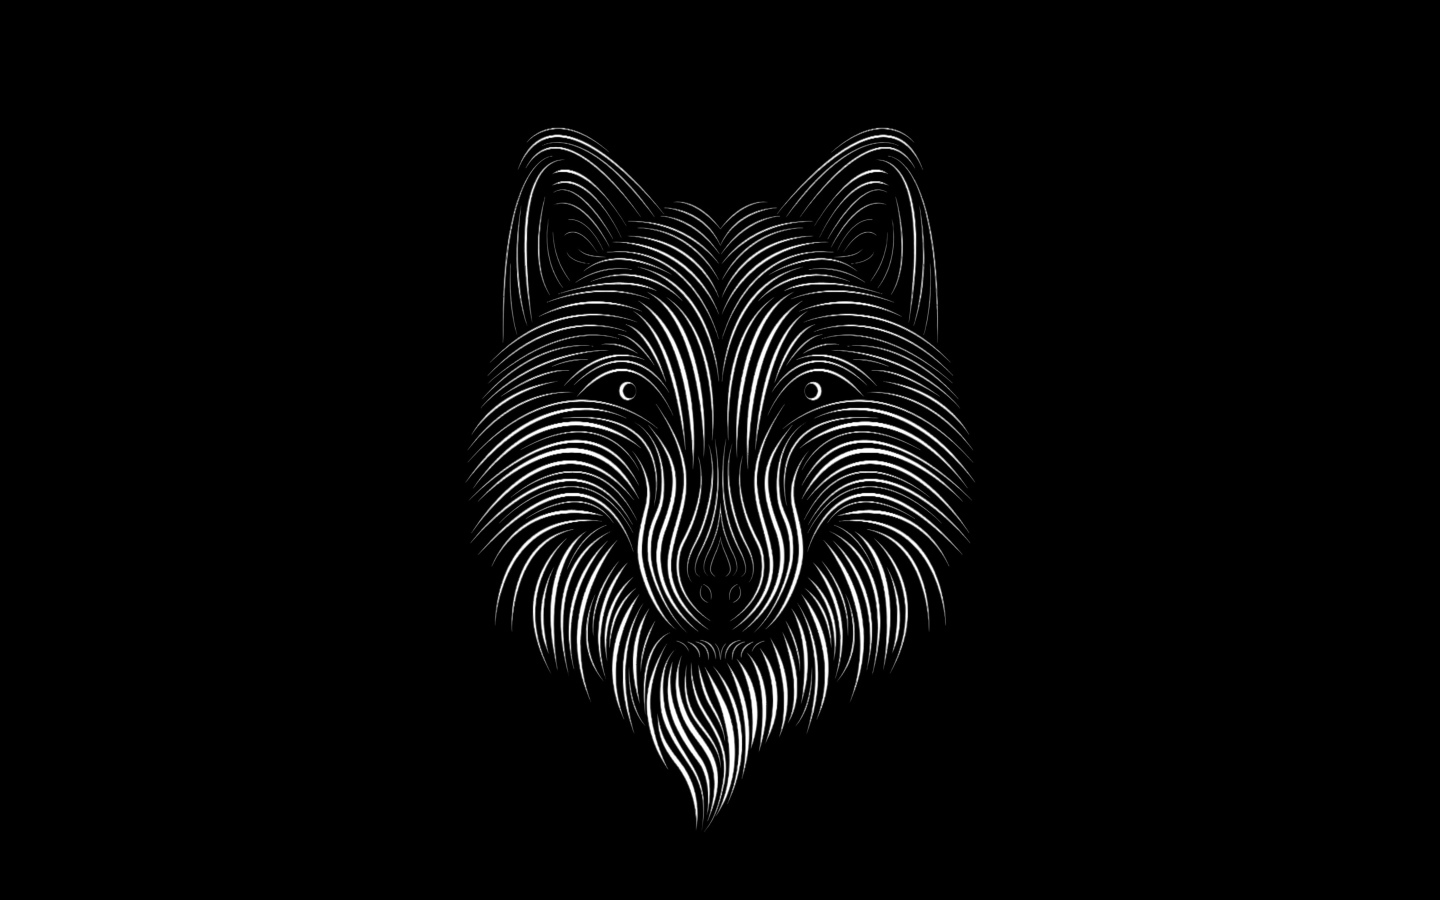 White wolf on black background